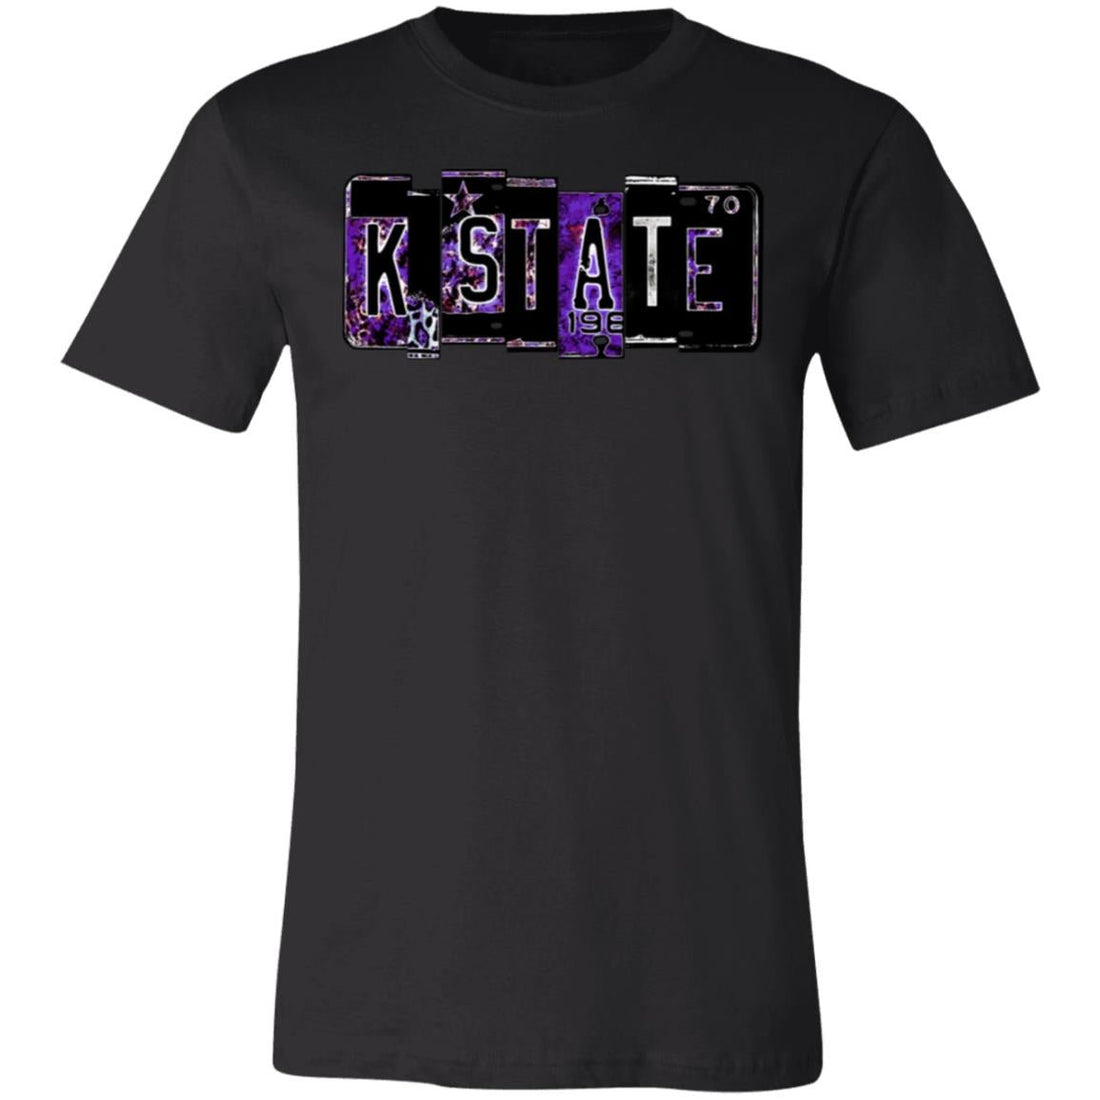 State Plates Short-Sleeve T-Shirt - T-Shirts - Positively Sassy - State Plates Short-Sleeve T-Shirt